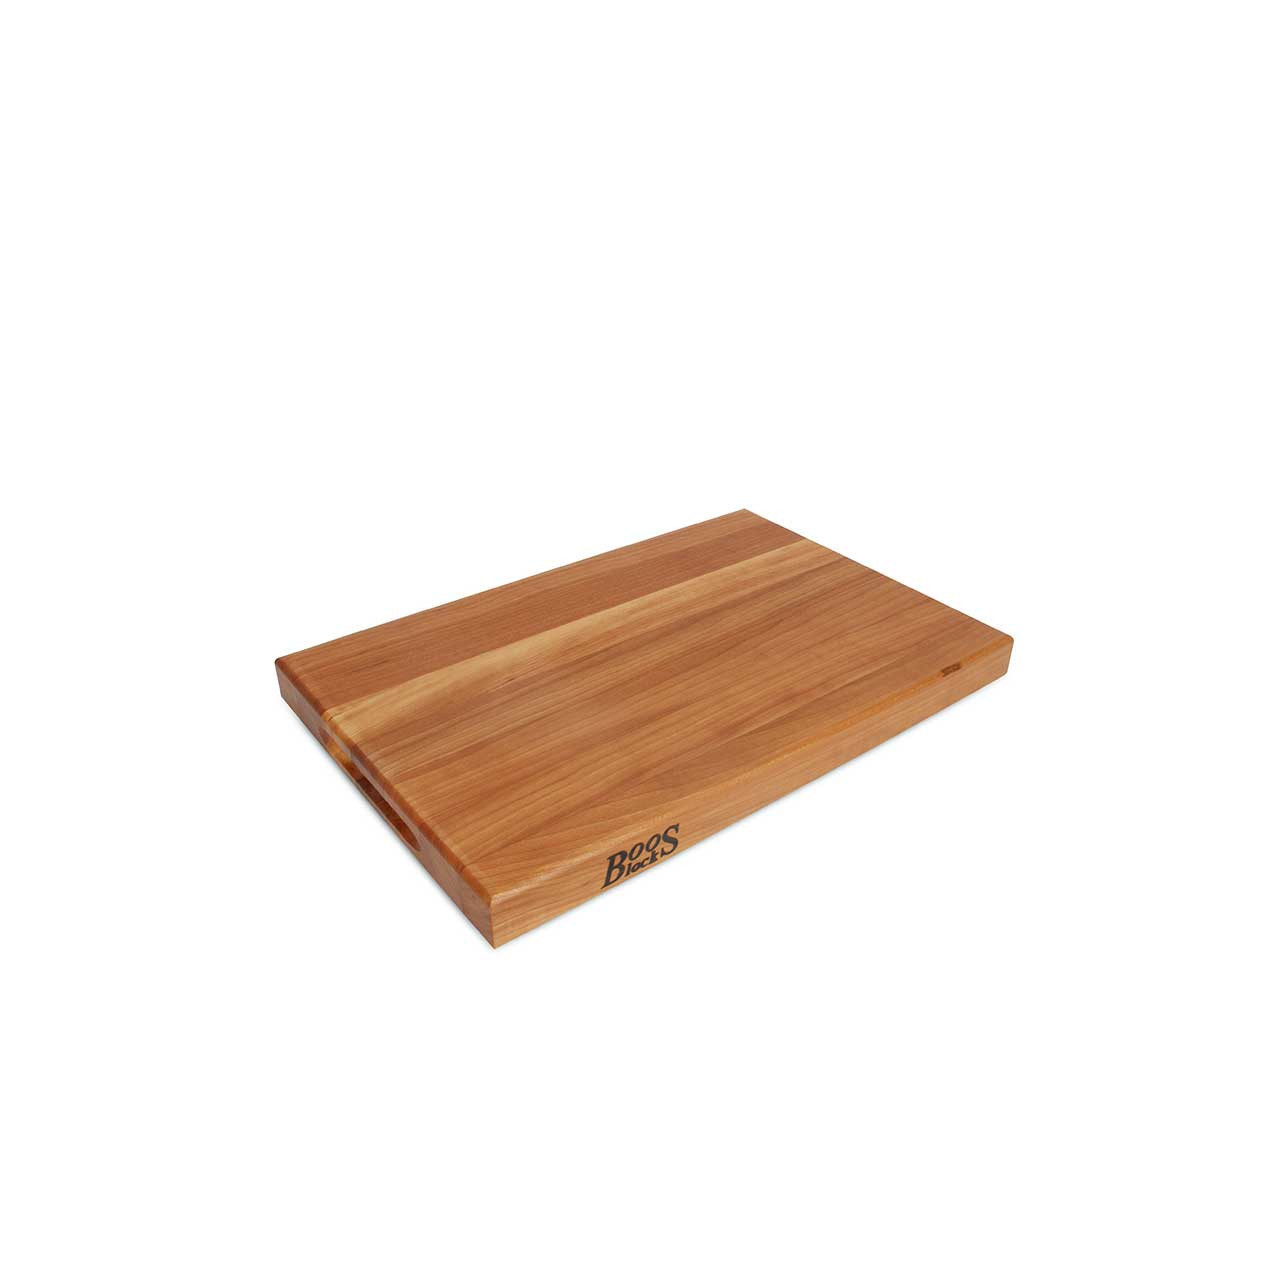 3/4 Thick Amber Bamboo Custom Cutting Board - Natural Edge Grain